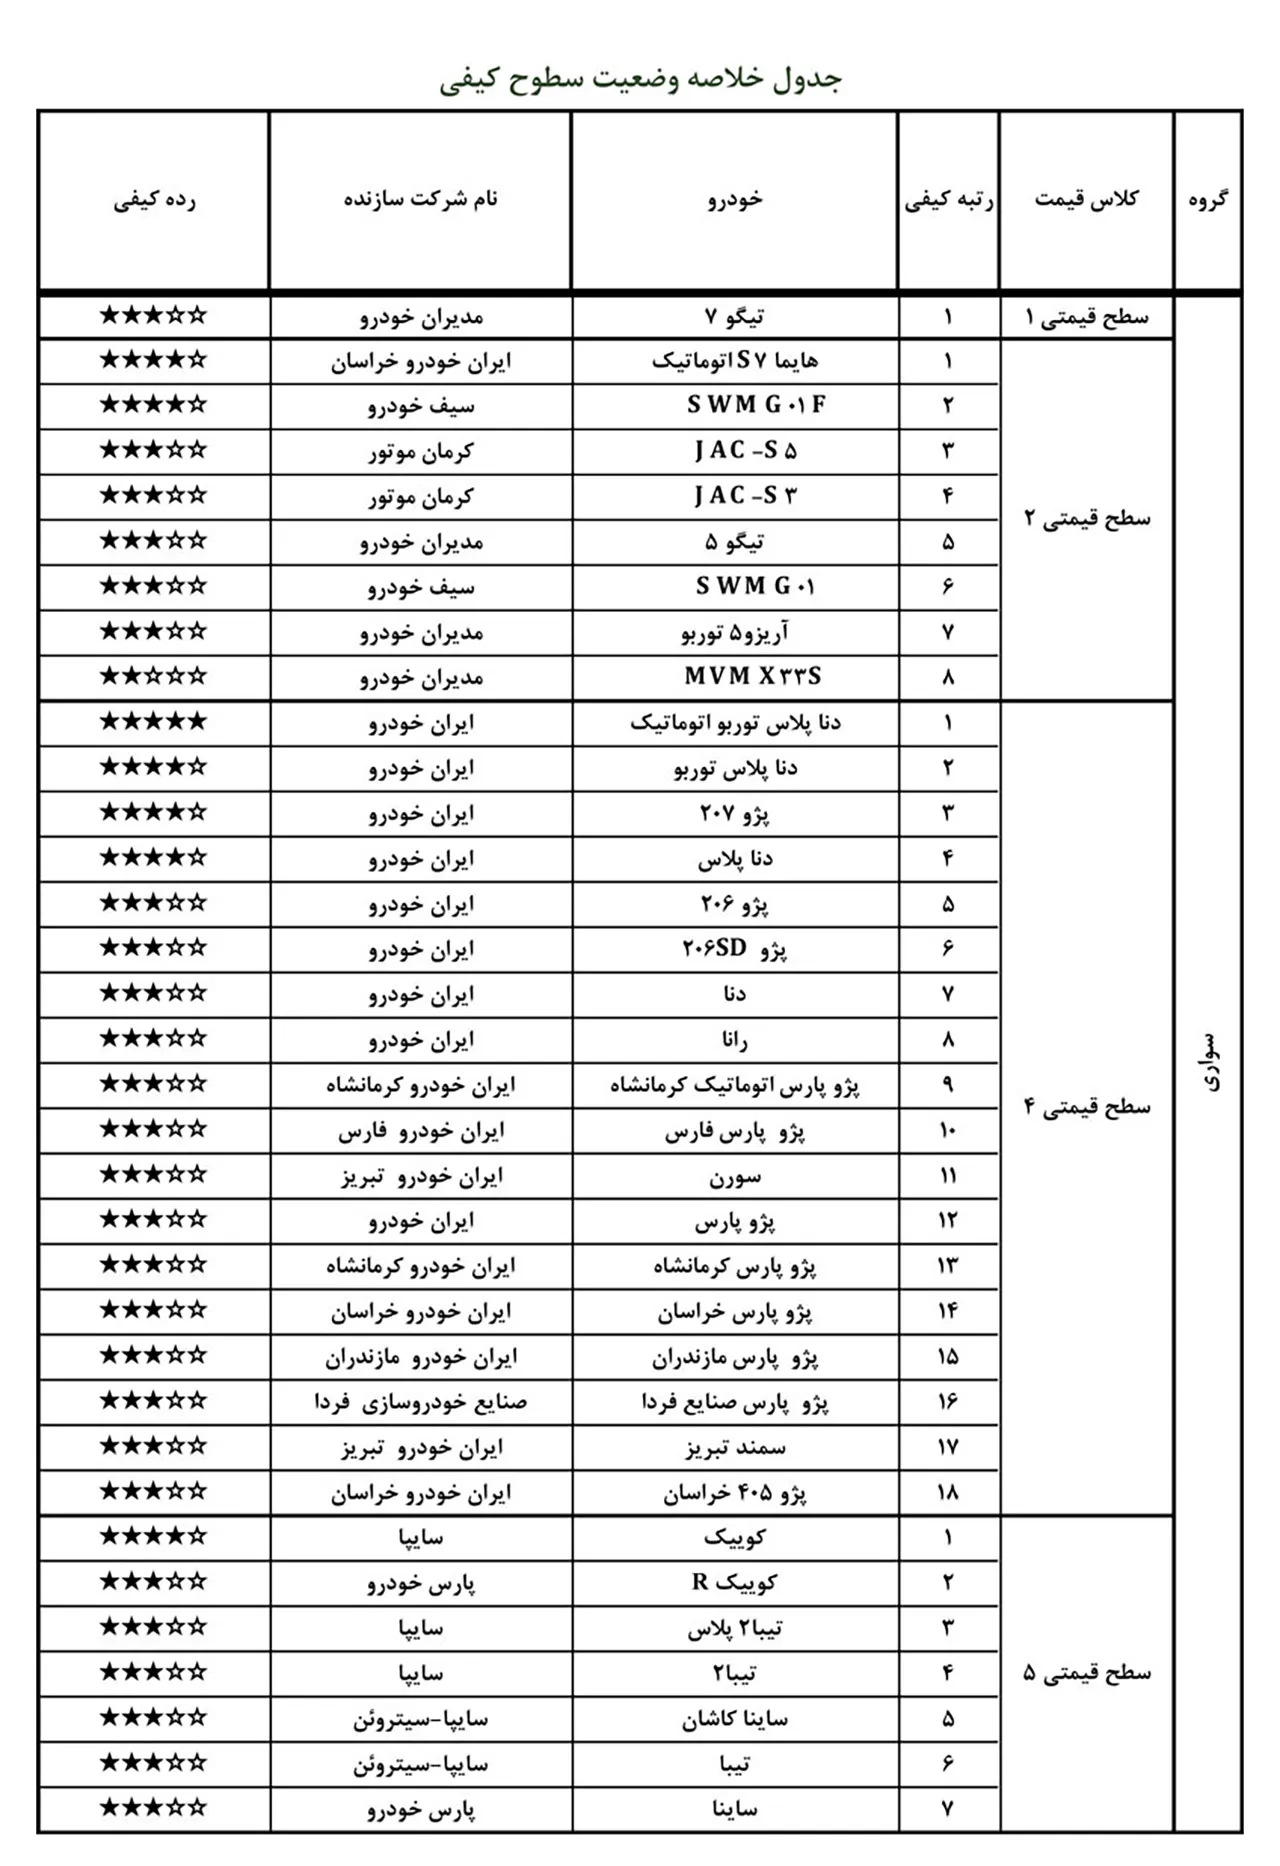 AutomobileFa Local Car Quality Report for Bahman99